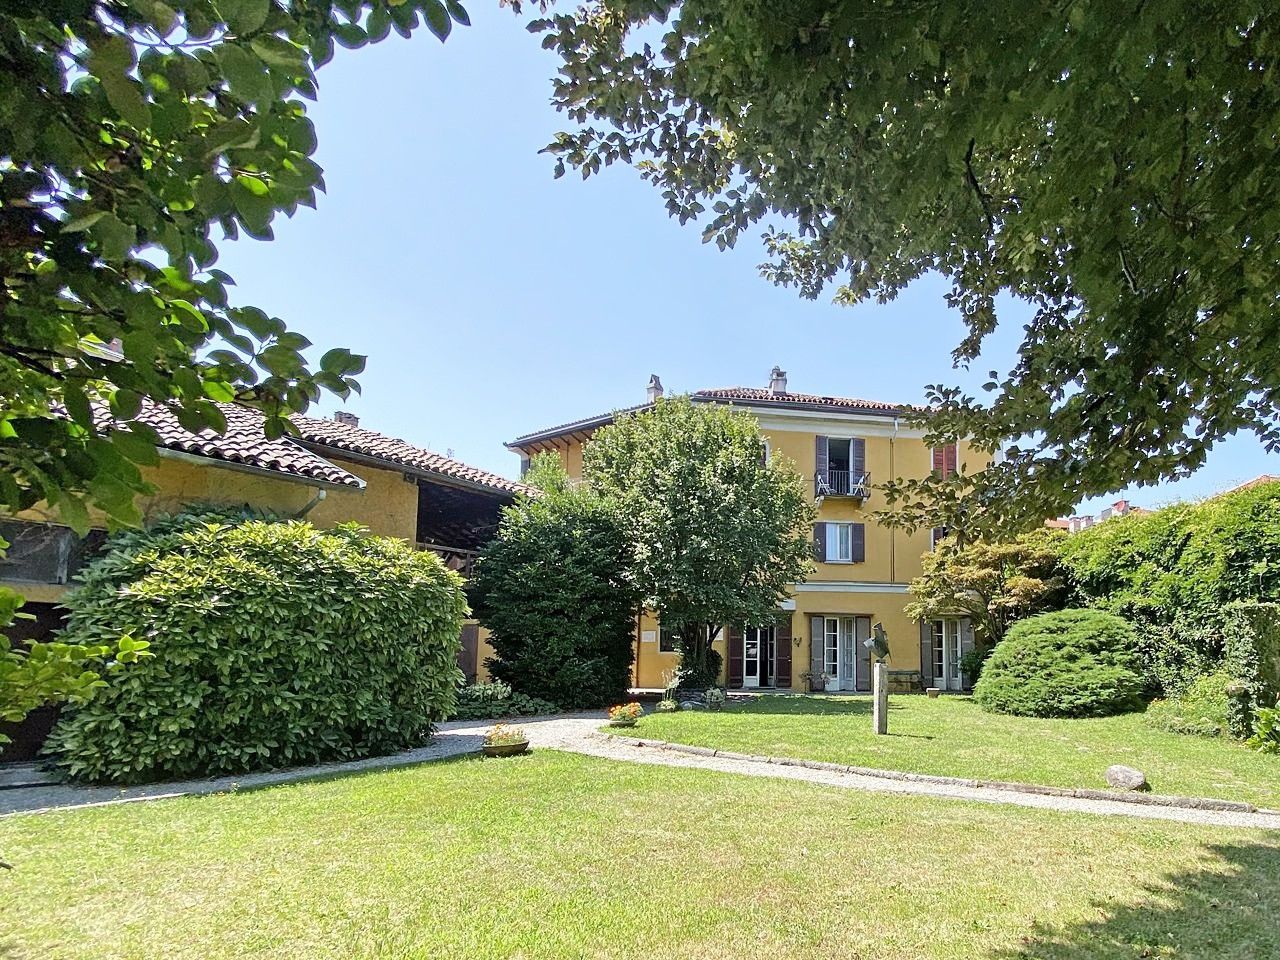 Photos Villa in Verbania Intra with large private garden